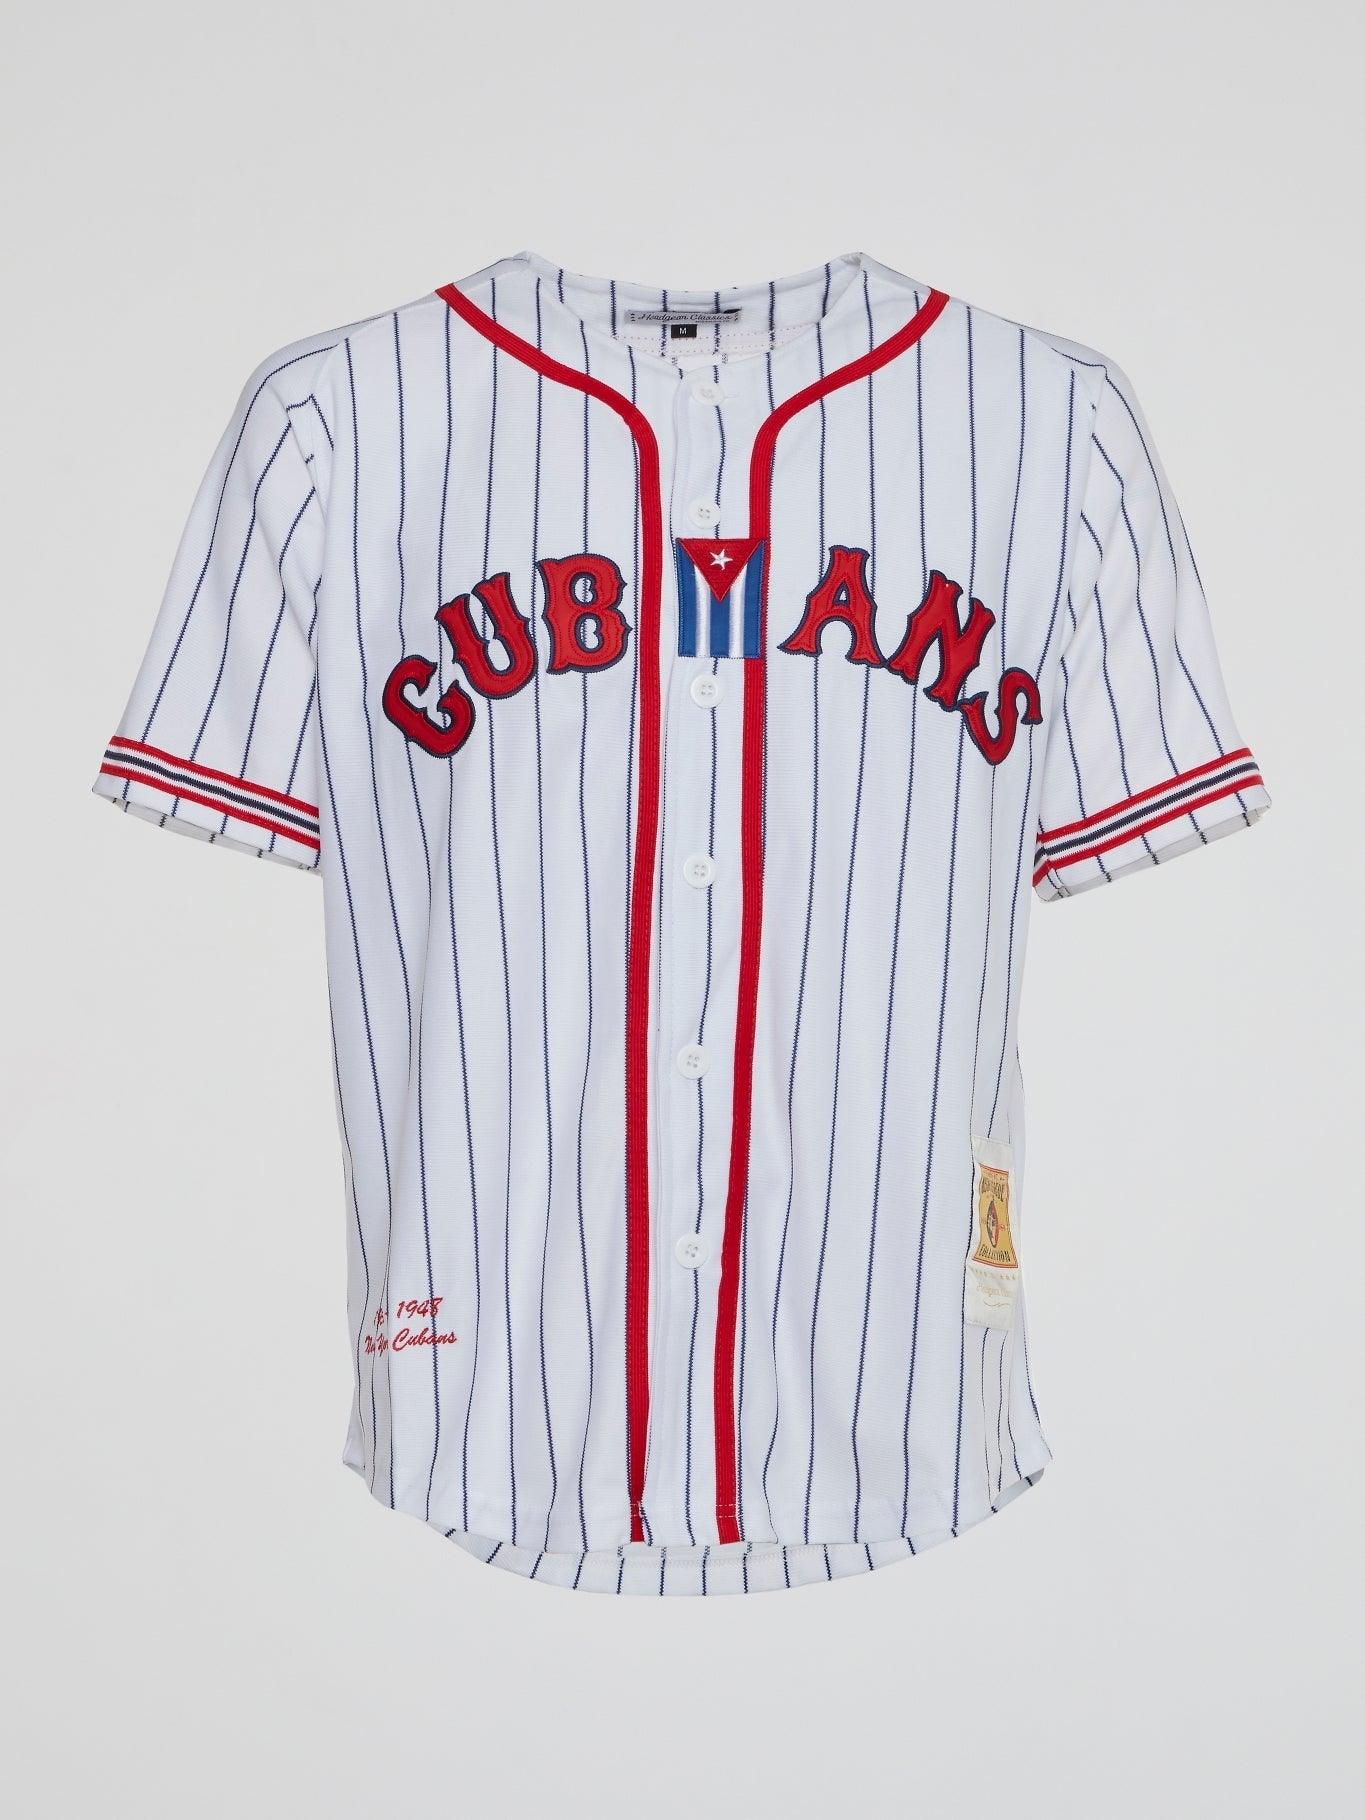 New York Cubans Baseball Jersey - B-Hype Society